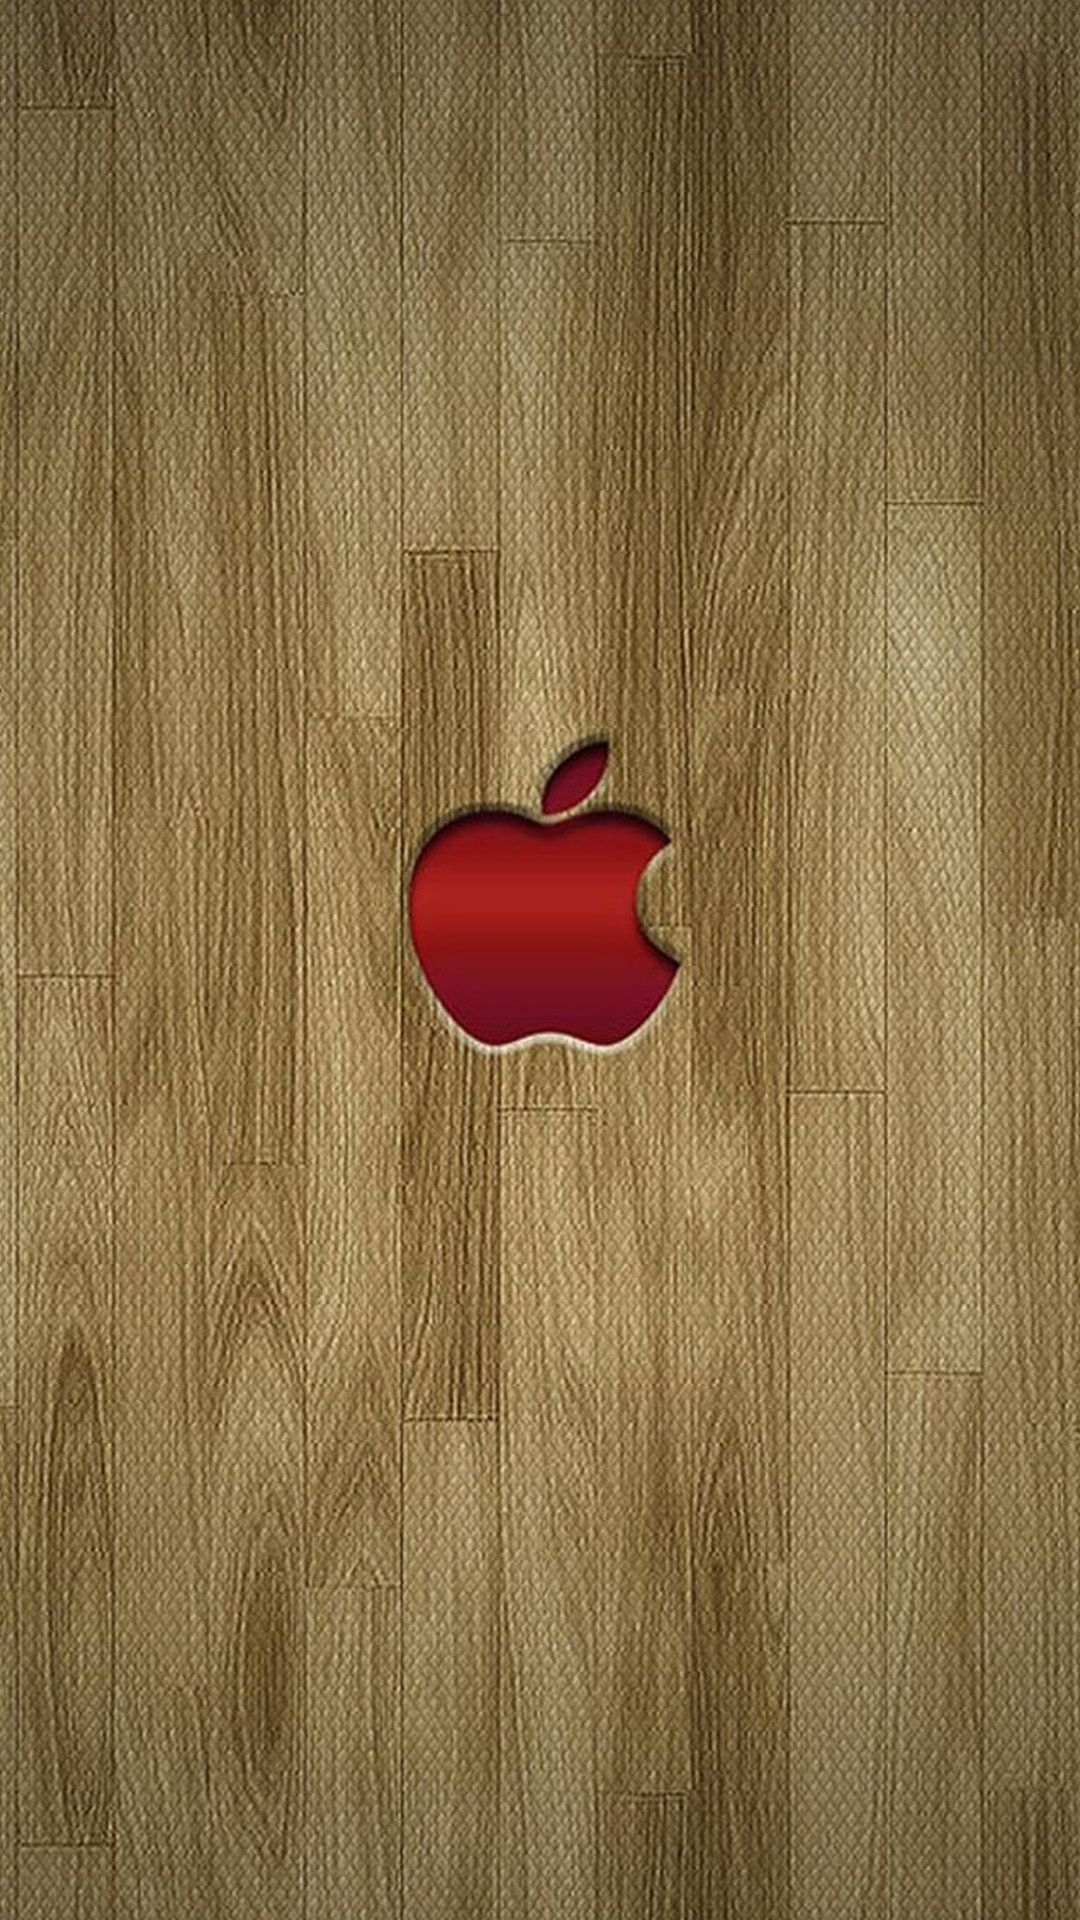 1080x1920 Apple iPhone Wallpapers | | Apple wallpaper iphone, Apple wallpaper, Apple logo wallpaper iphone